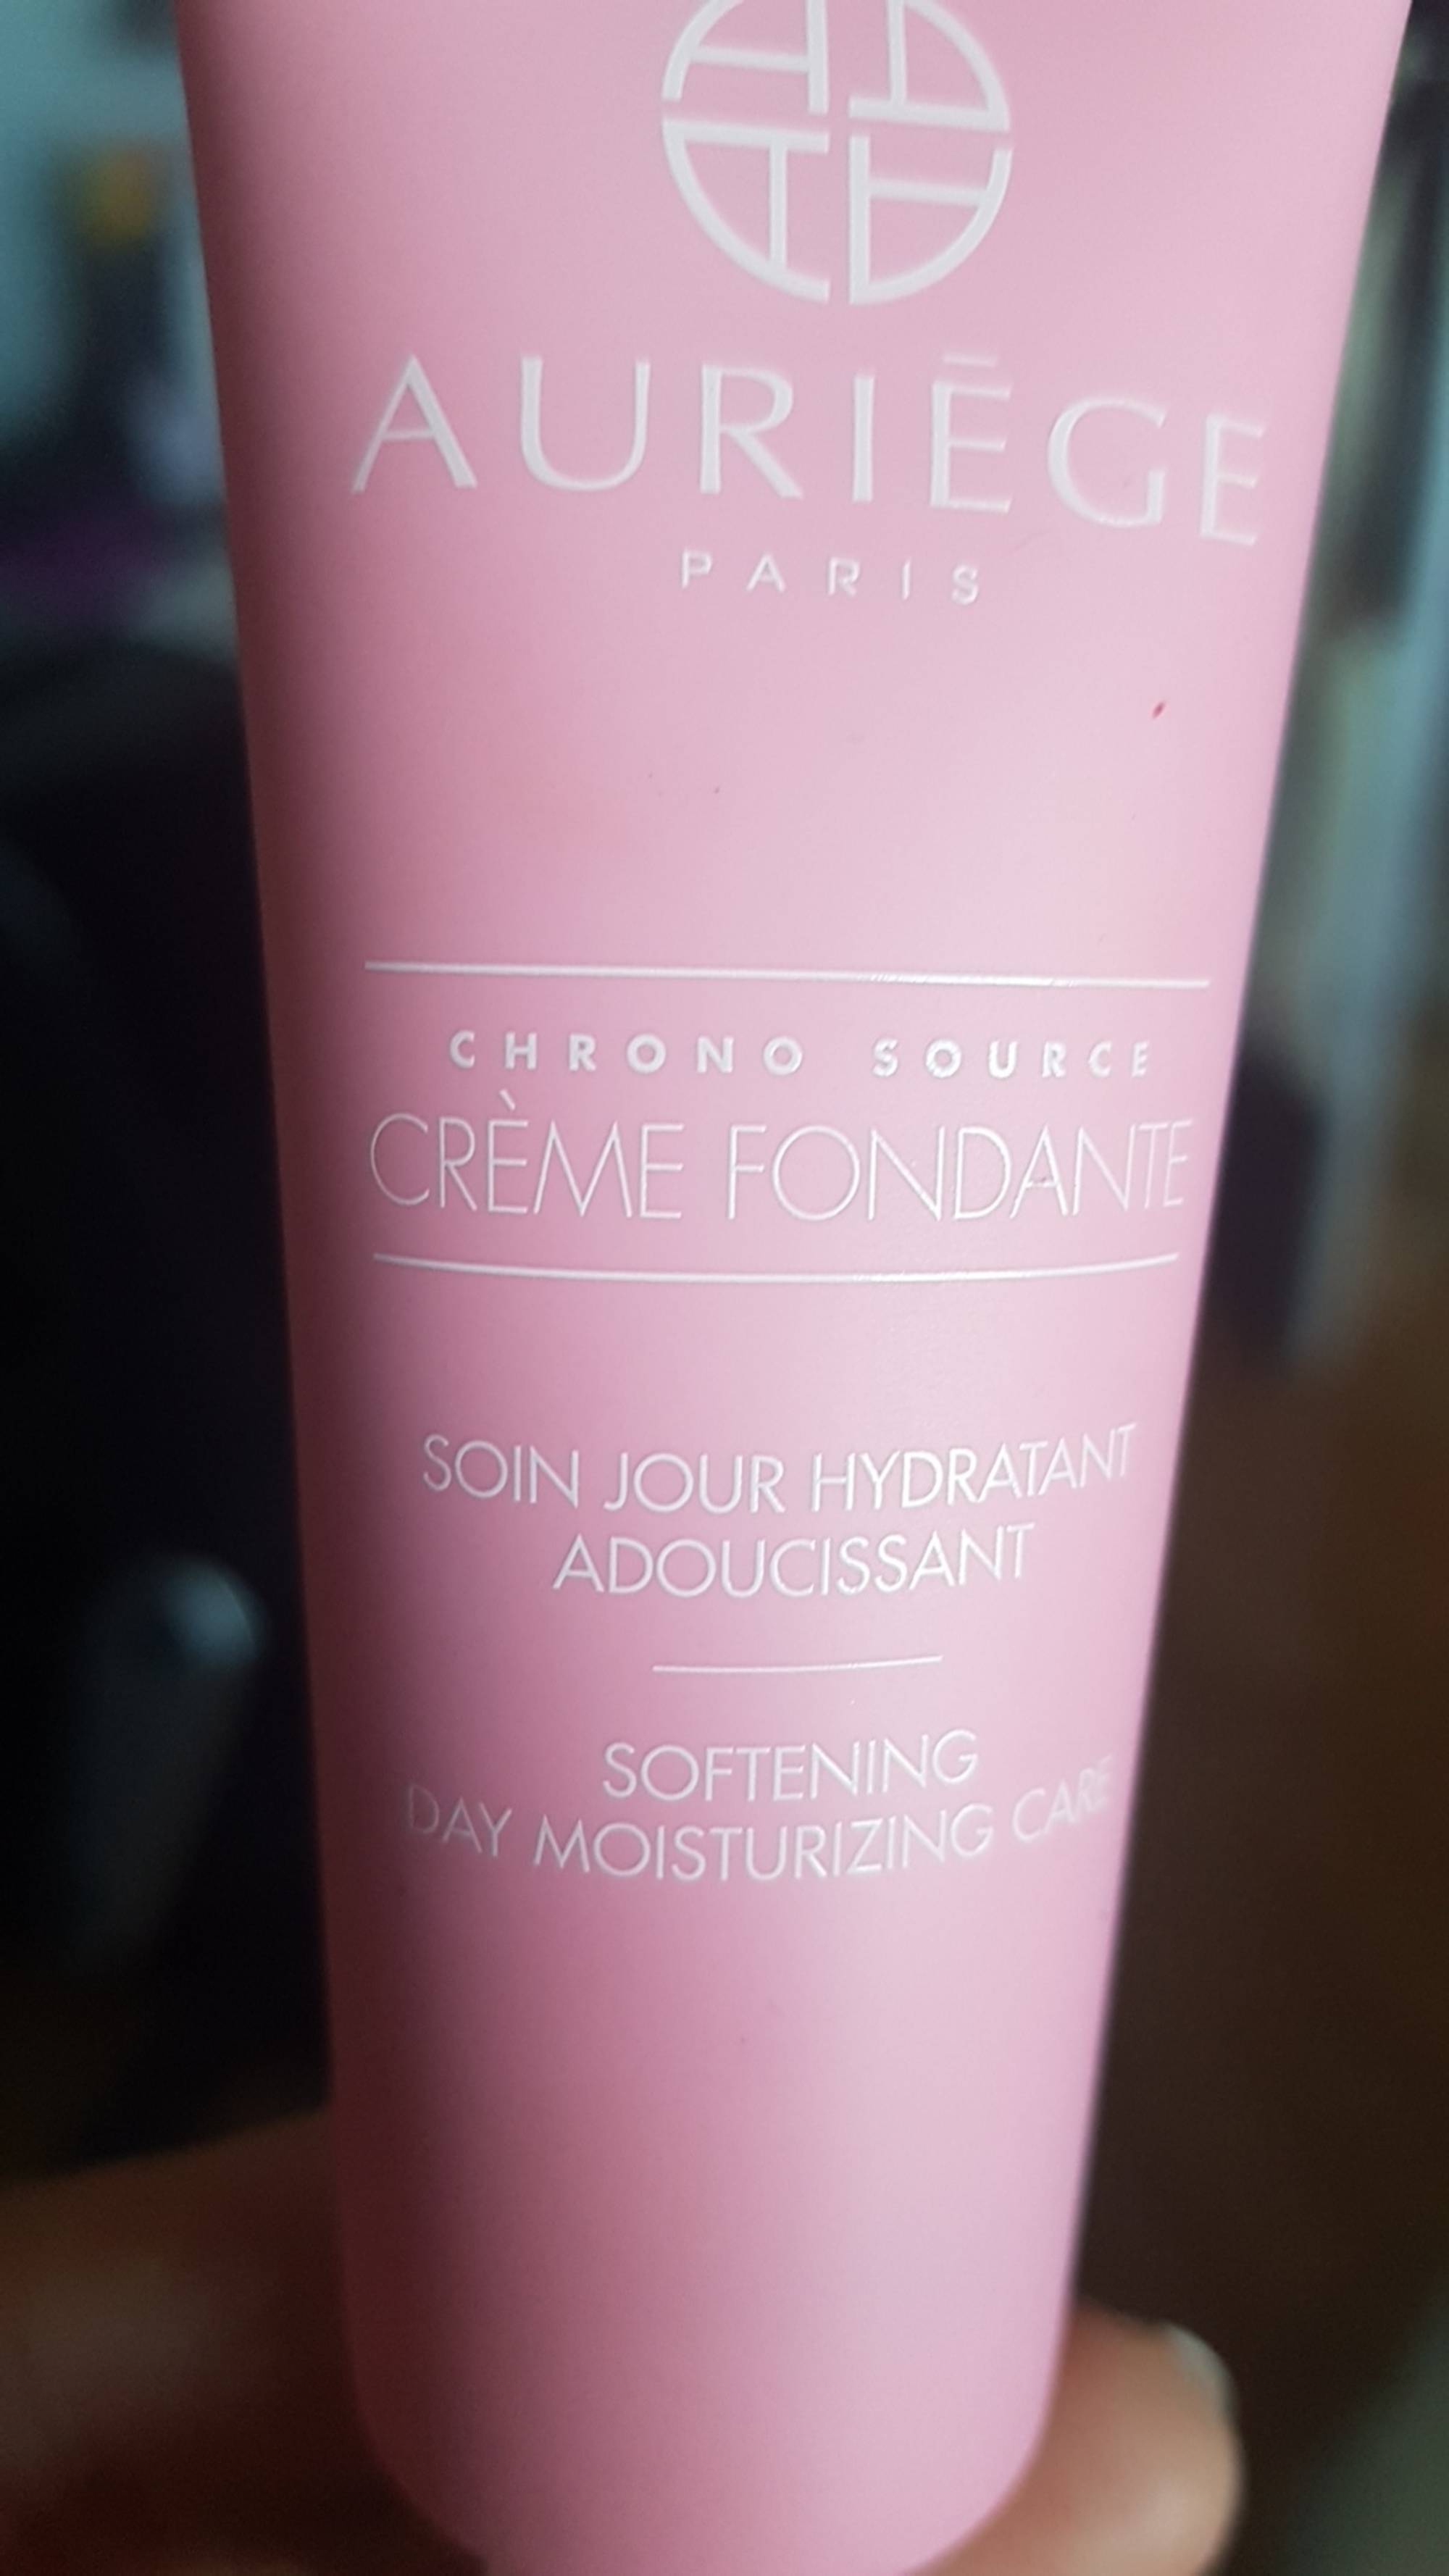 AURIÈGE - Chrono source - Crème fondante